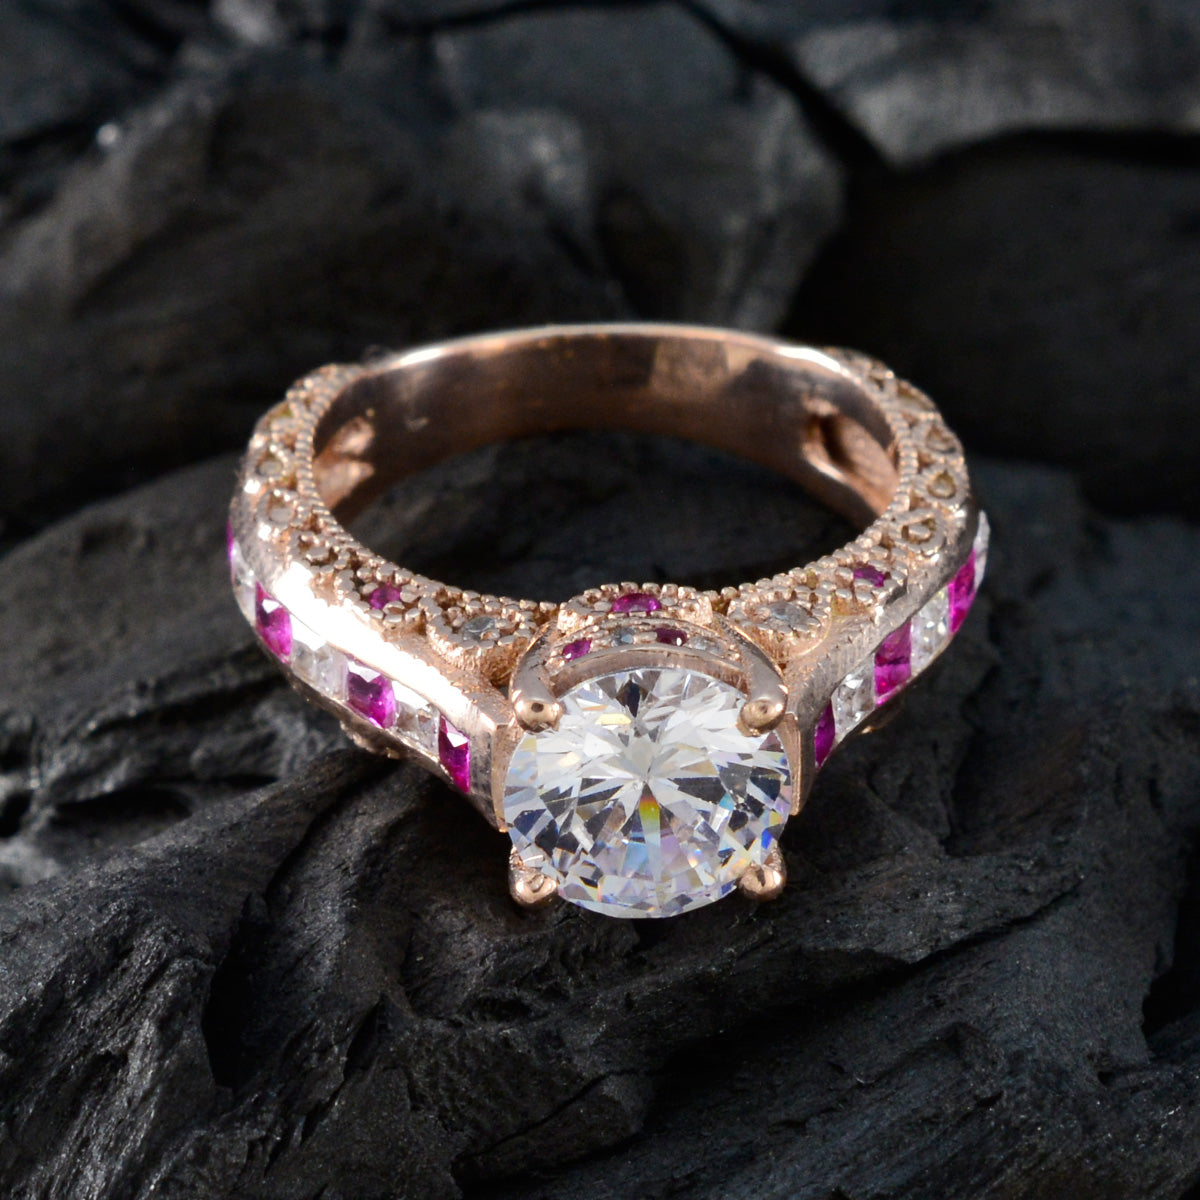 Anillo de plata a gran escala riyo con chapado en oro rosa, piedra de rubí cz, engaste de punta redonda, joyería, anillo de Acción de Gracias